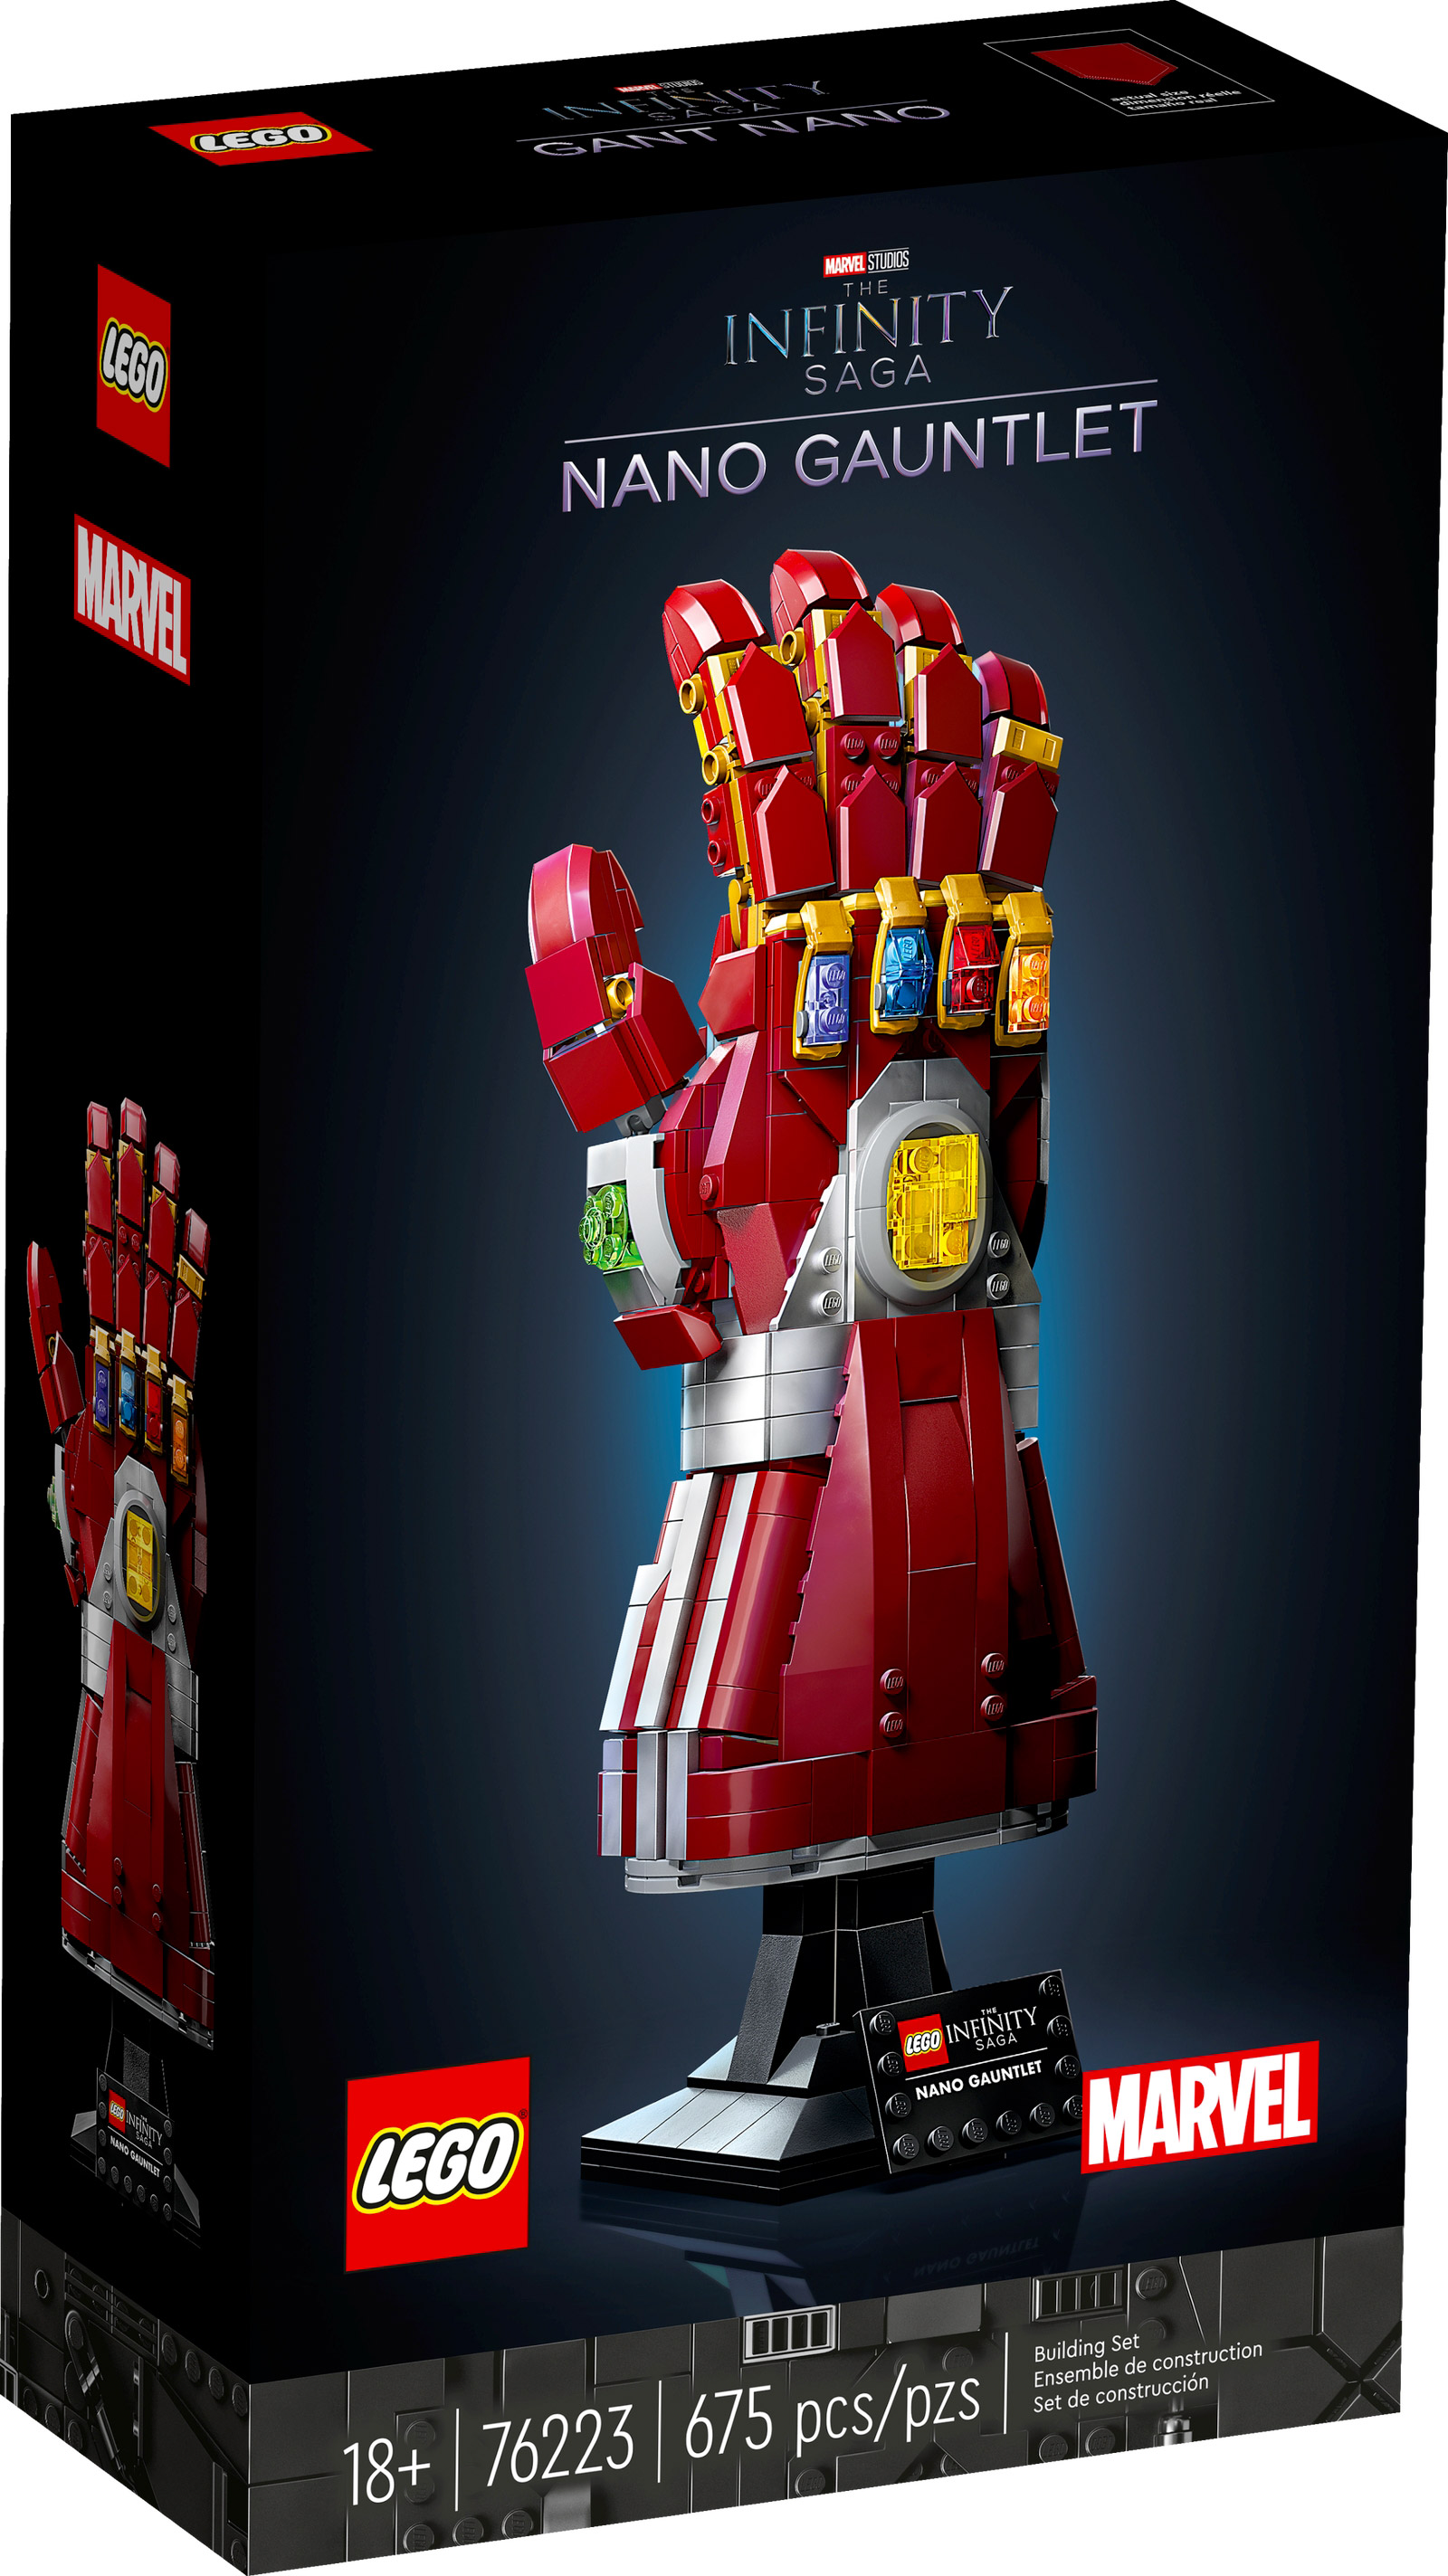 LEGO Marvel 76217 Je s'appelle Groot pas cher - Lego - Achat moins cher